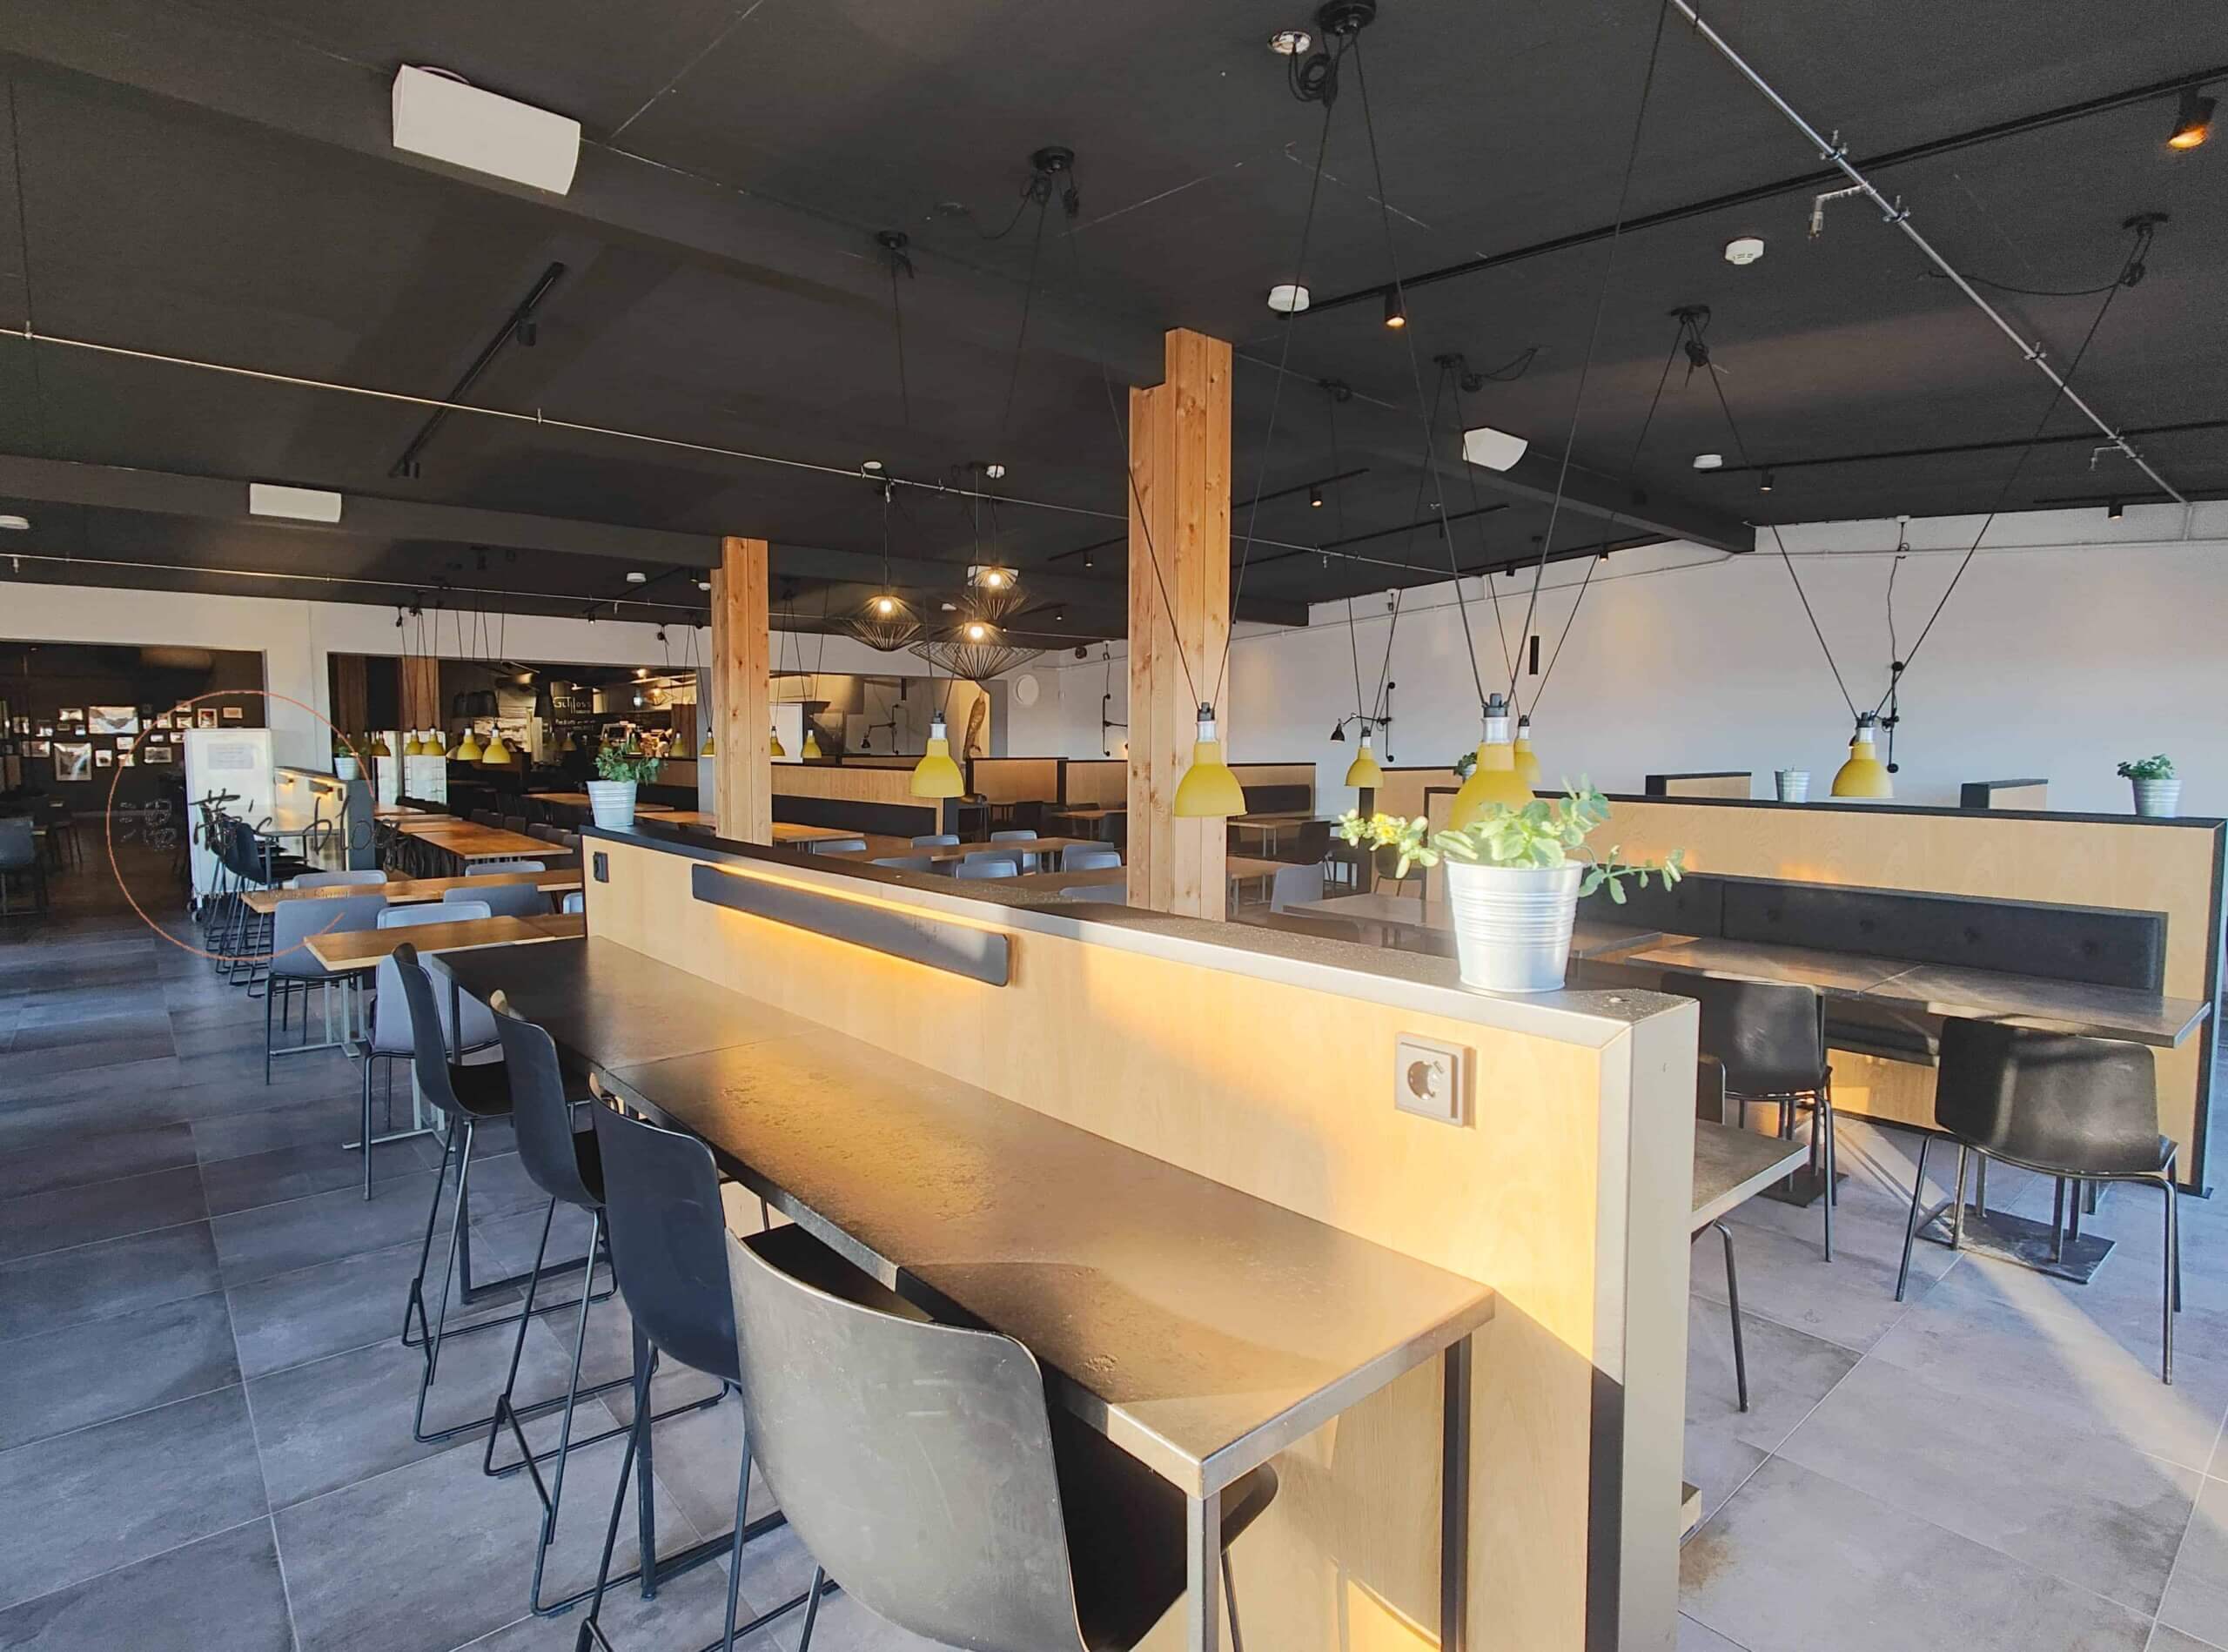 Gullfoss-Panorama Restaurant-Cafe-Shop店內座位